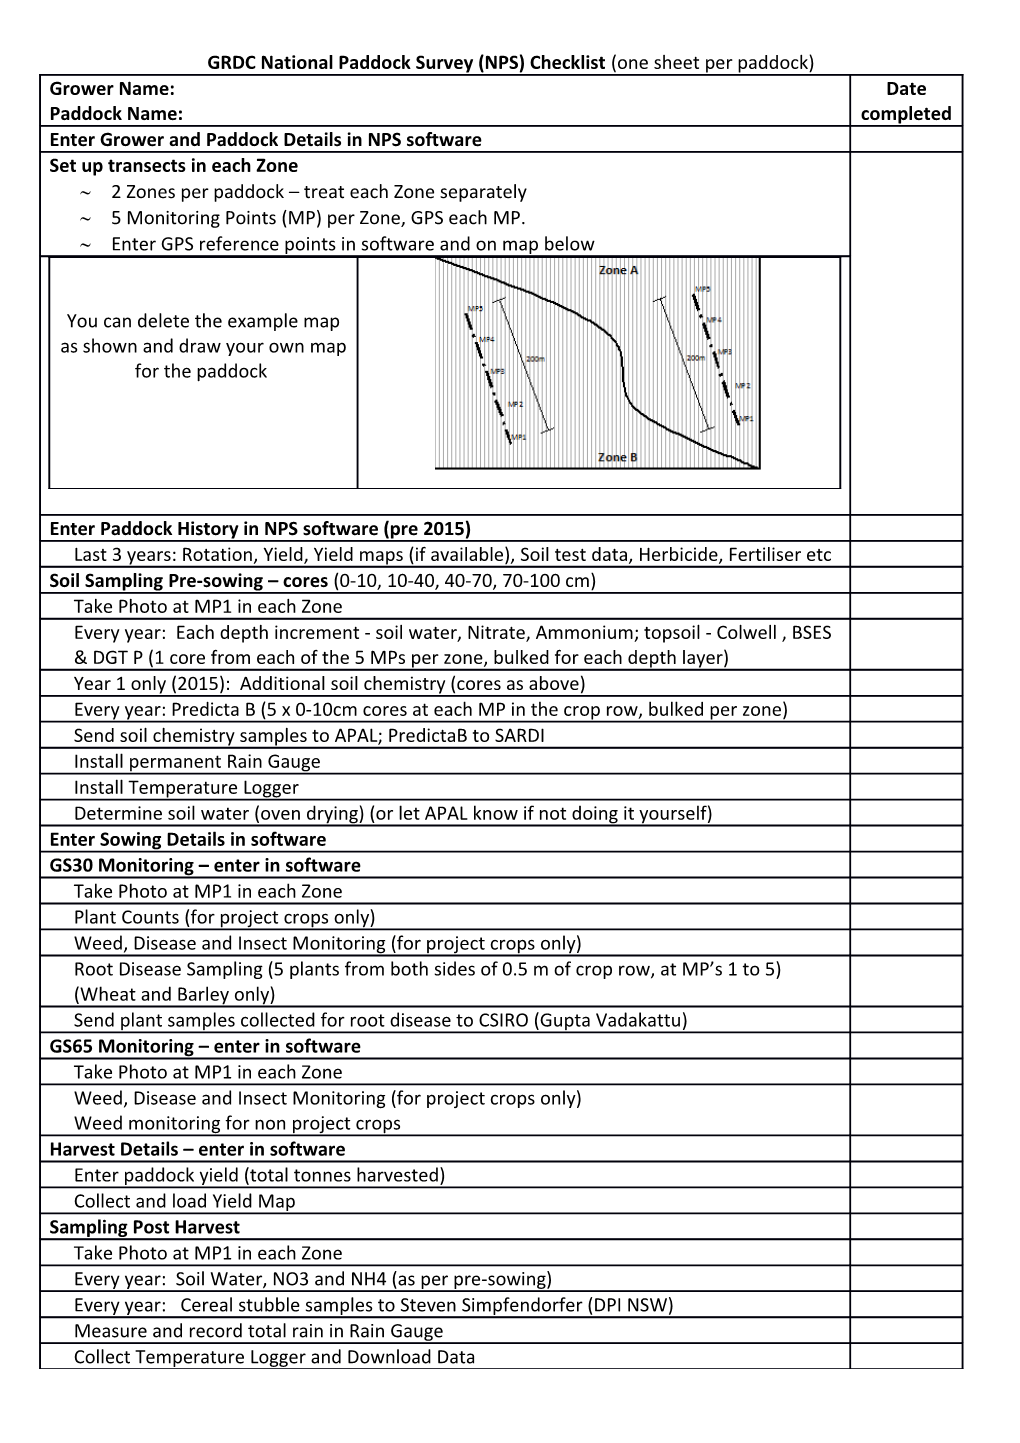 GRDC National Paddock Survey (NPS) Checklist (One Sheet Per Paddock)